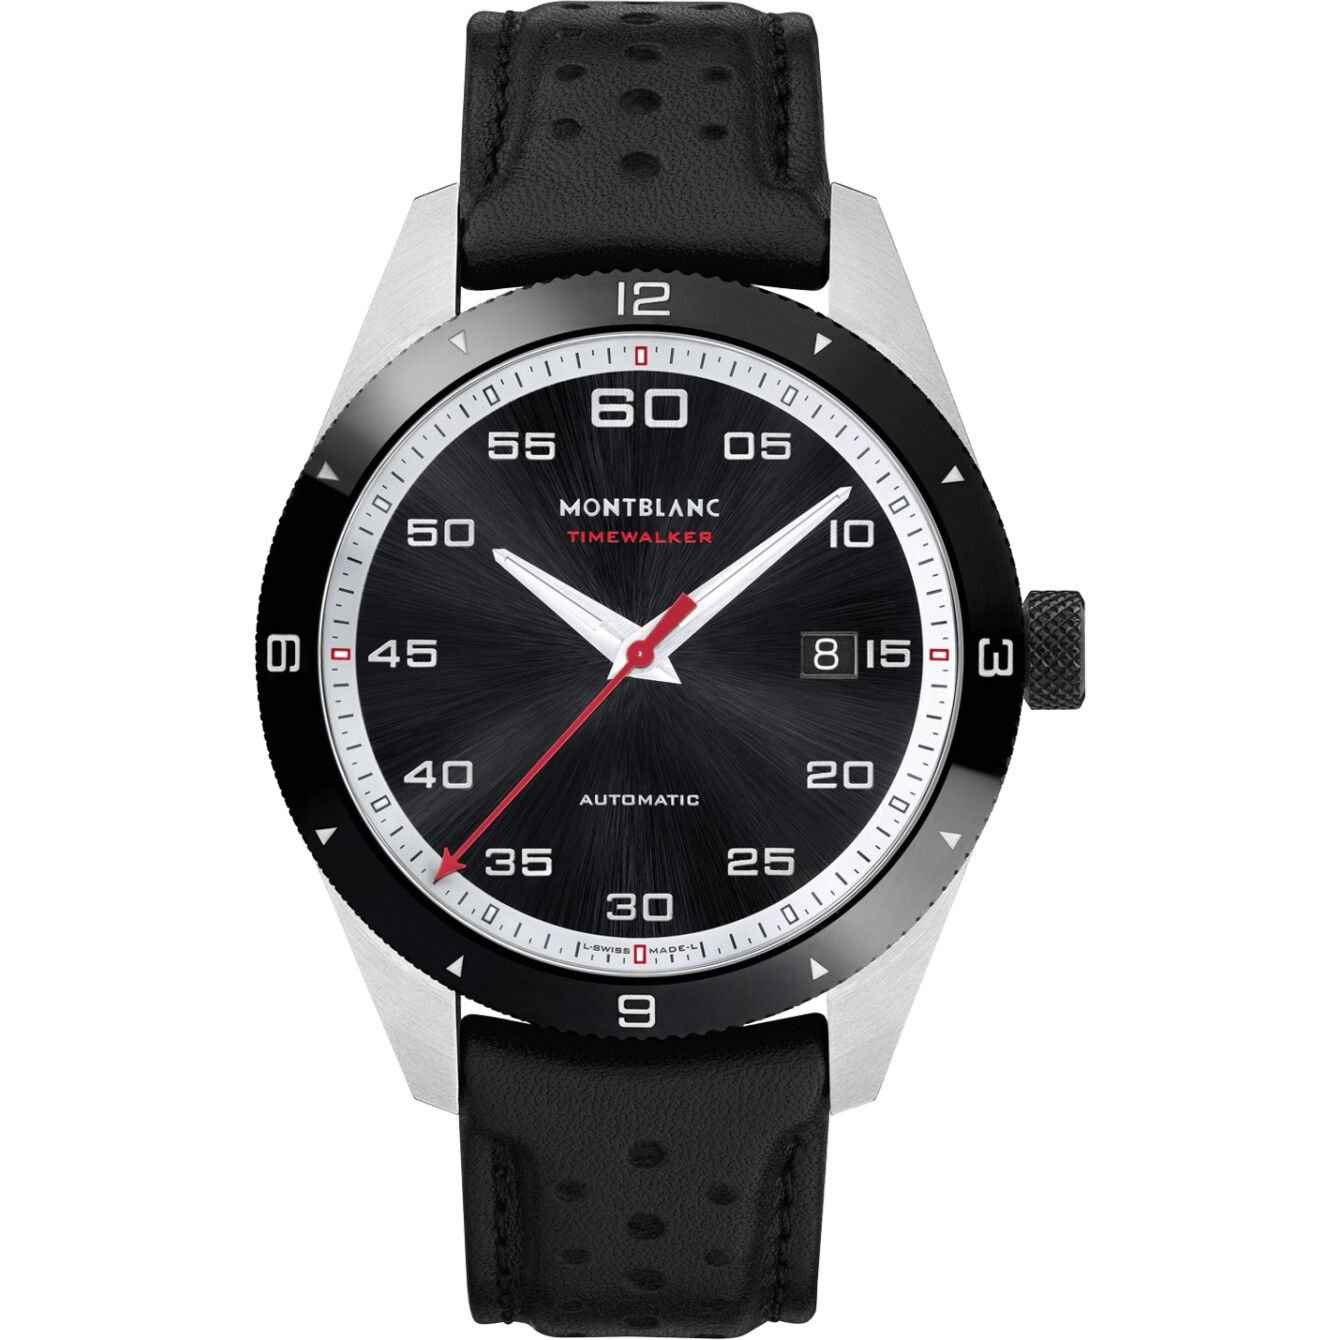  Montblanc TimeWalker 116061 Date Automatic 41mm 